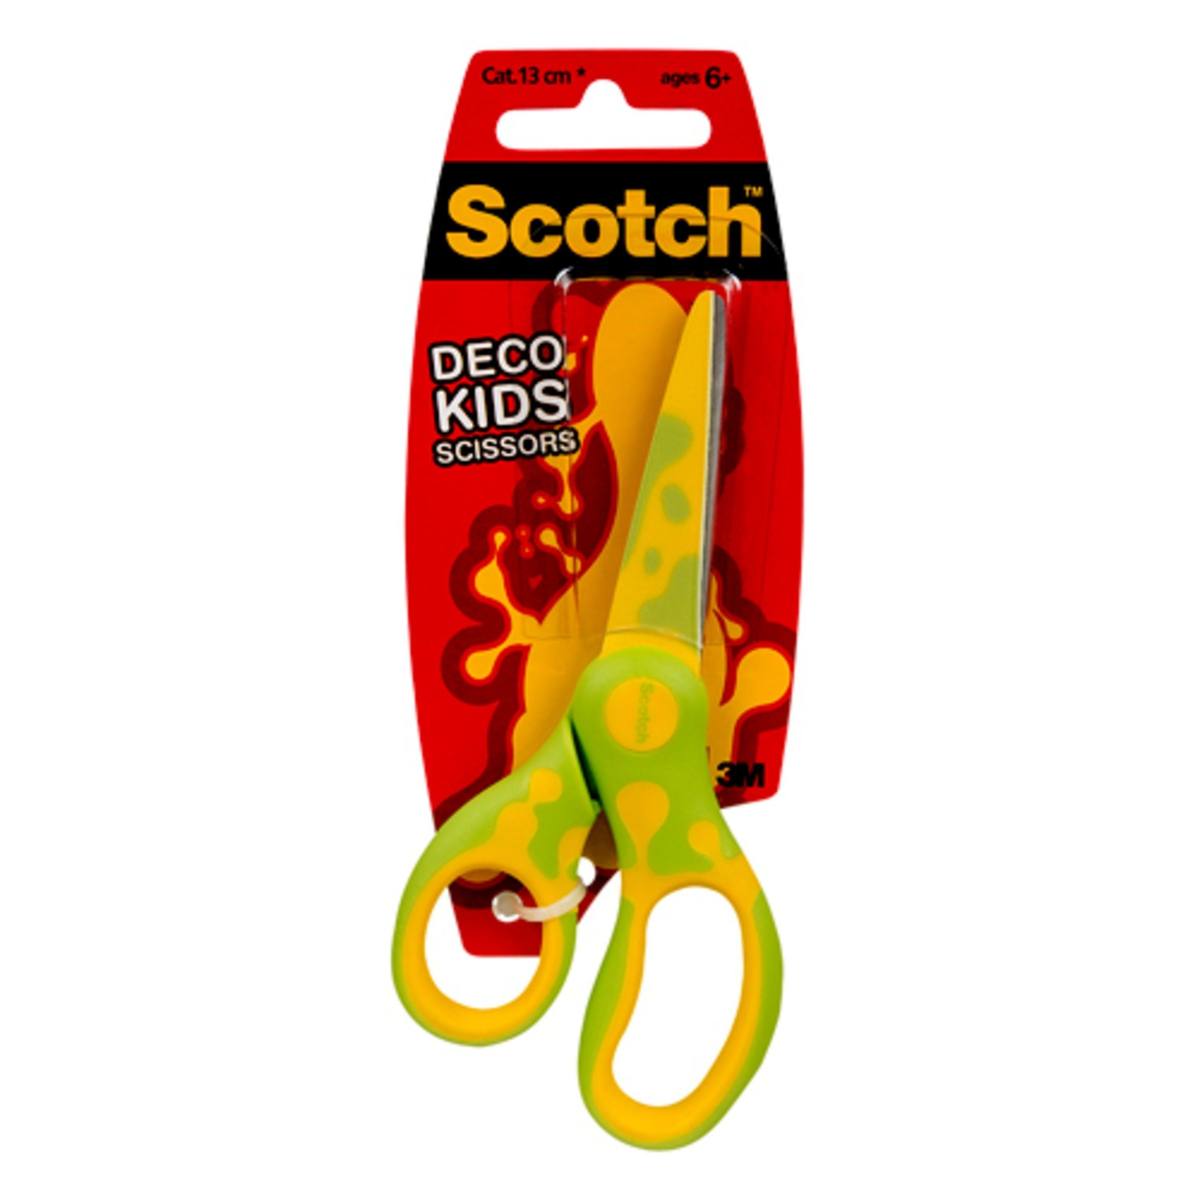 3M Scotch DECO children's scissors various models Models (green, blue or pink) 1 per pack 13 cm